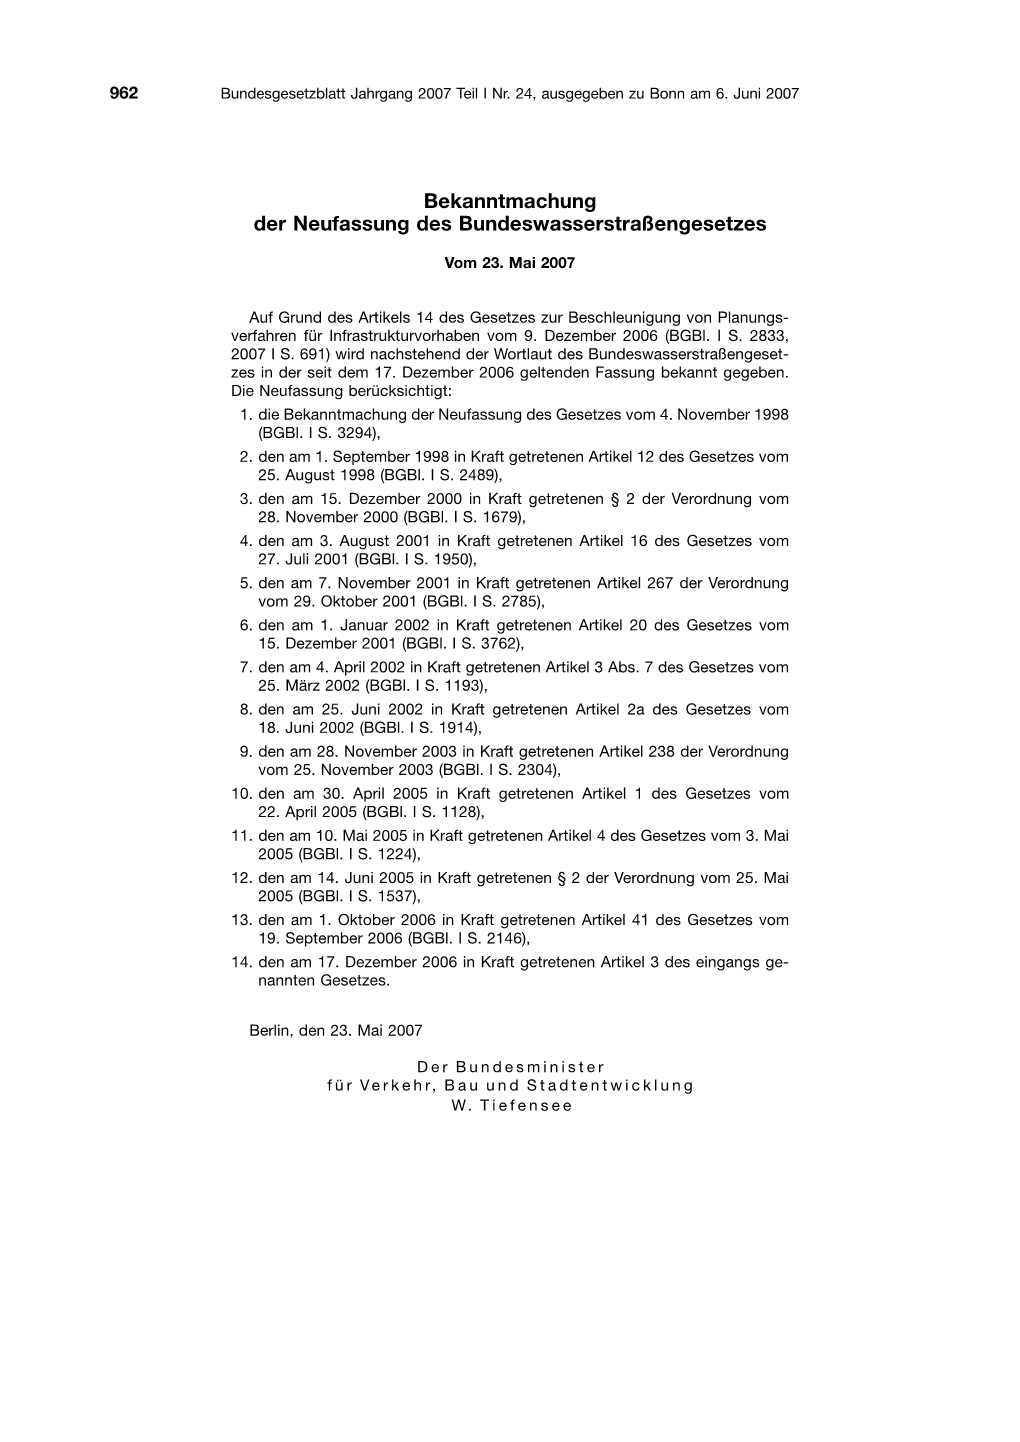 Bundesgesetzblatt Teil 1, Nr. 24